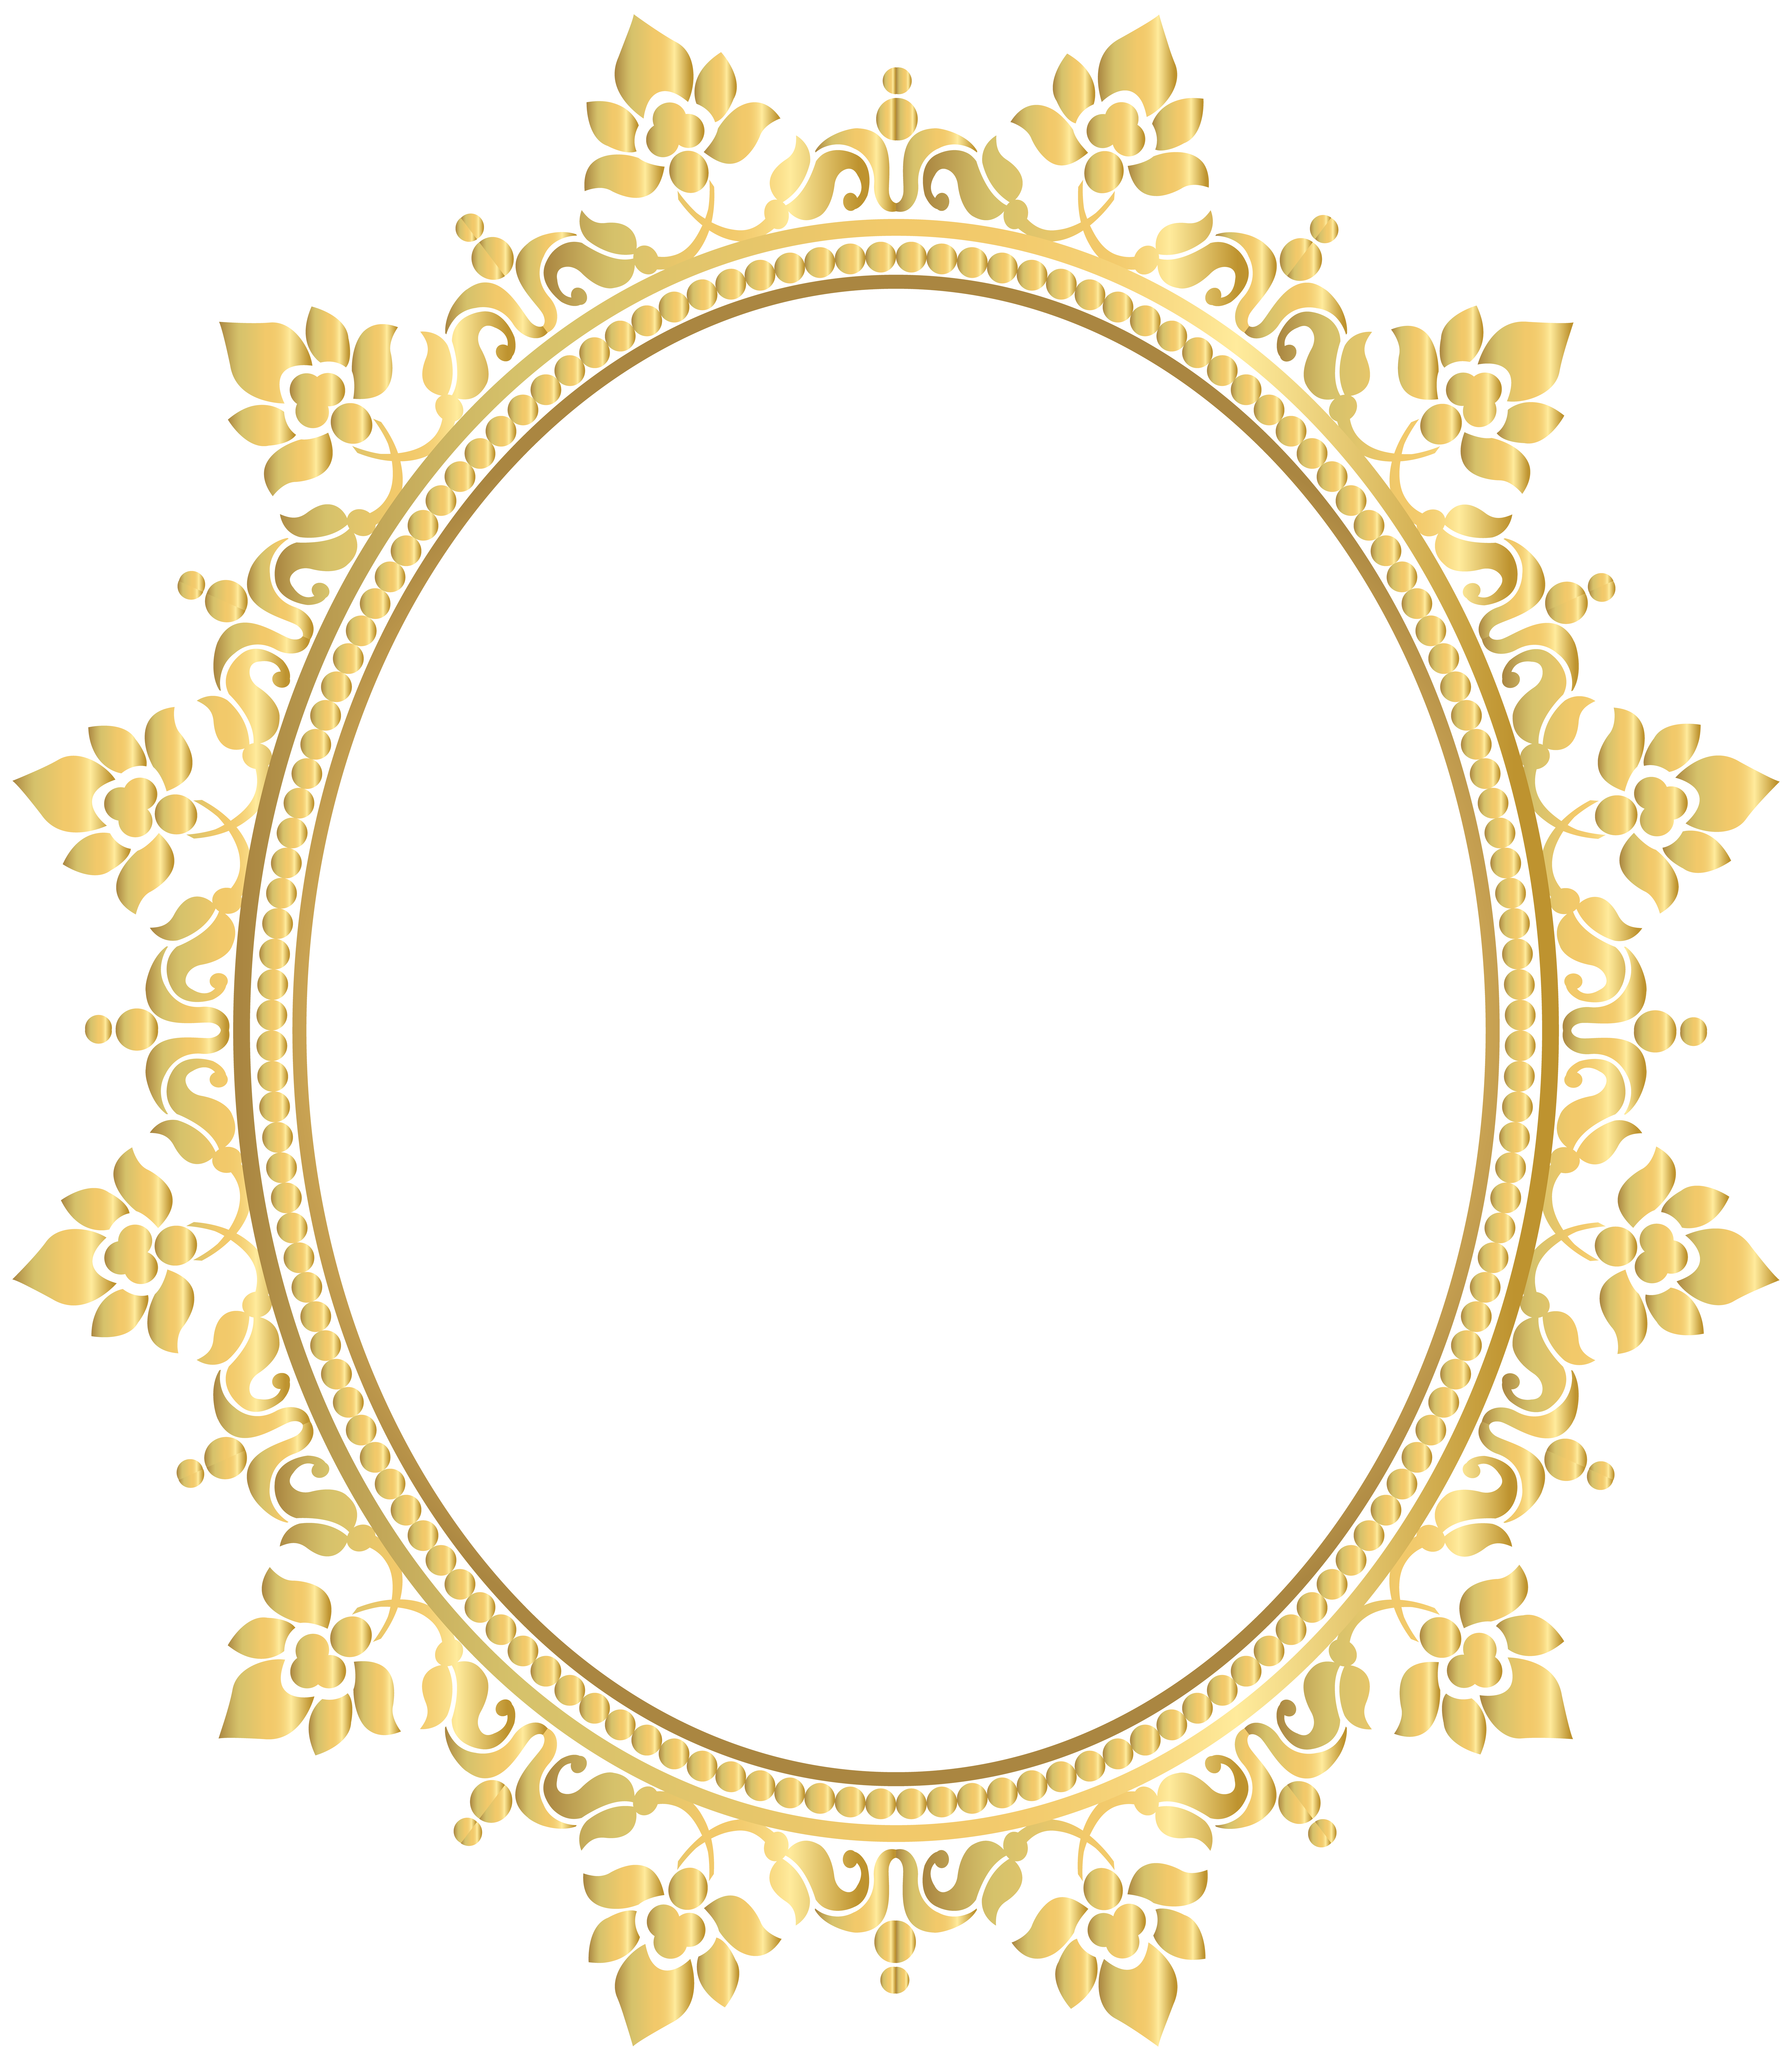 decorative frame clip art